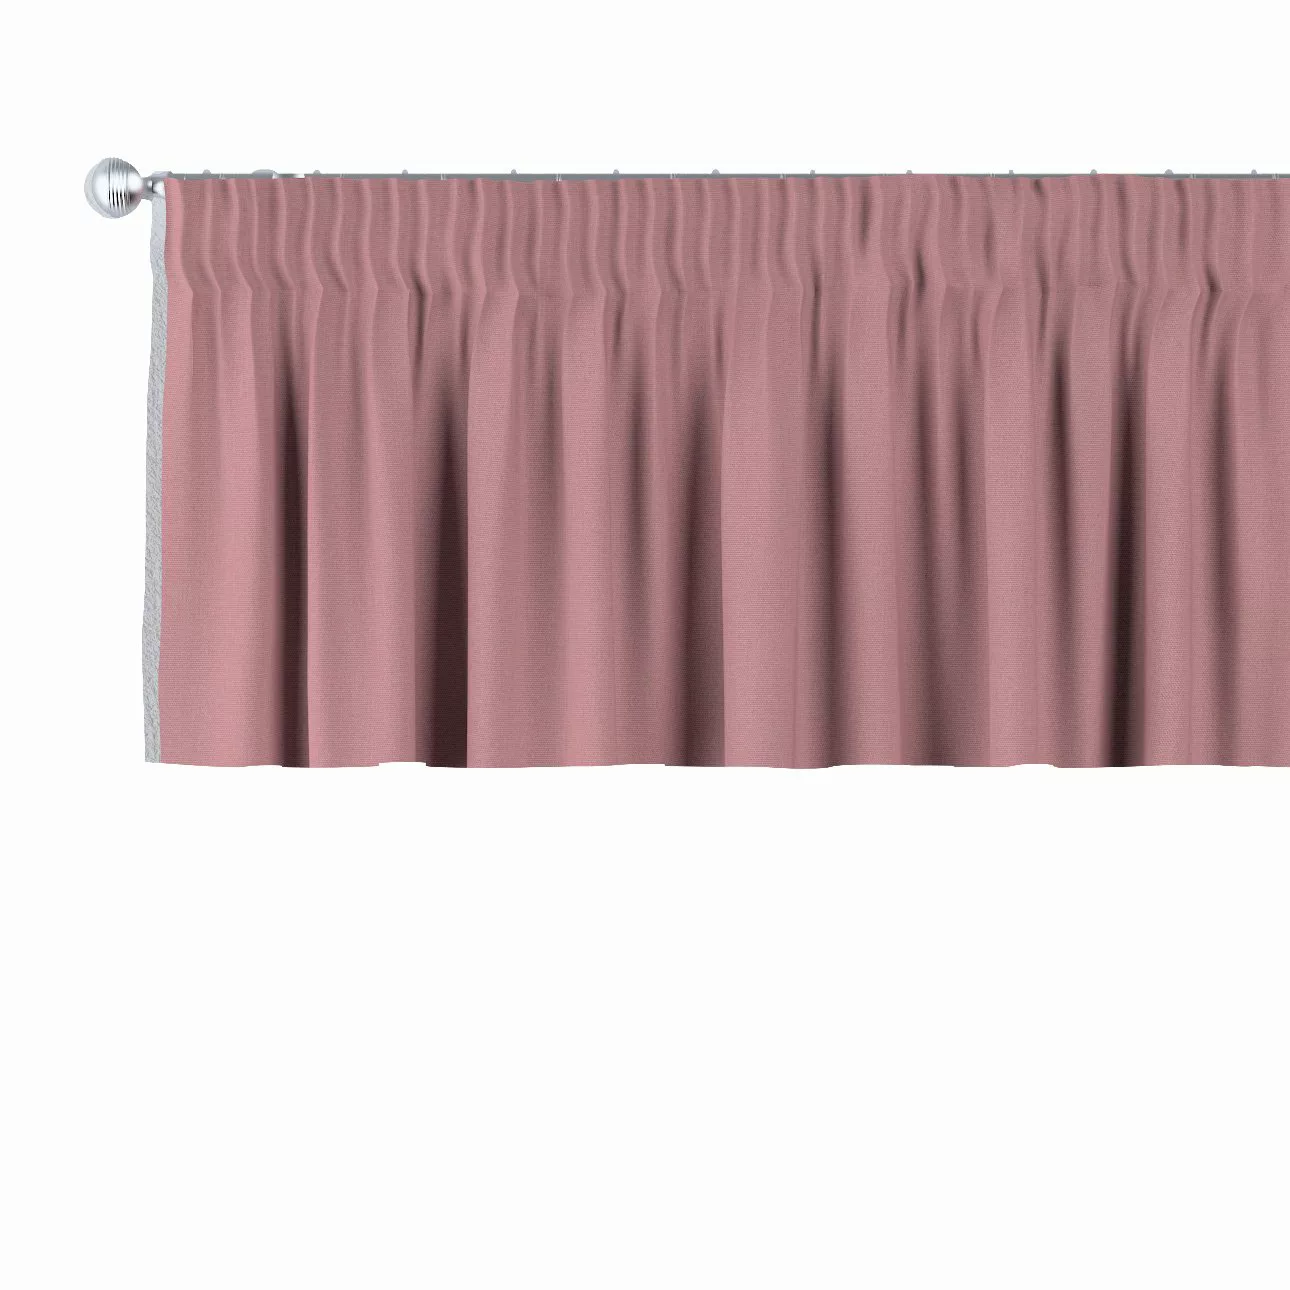 Kurzgardine mit Kräuselband, altrosa, 390 x 40 cm, Cotton Panama (702-43) günstig online kaufen